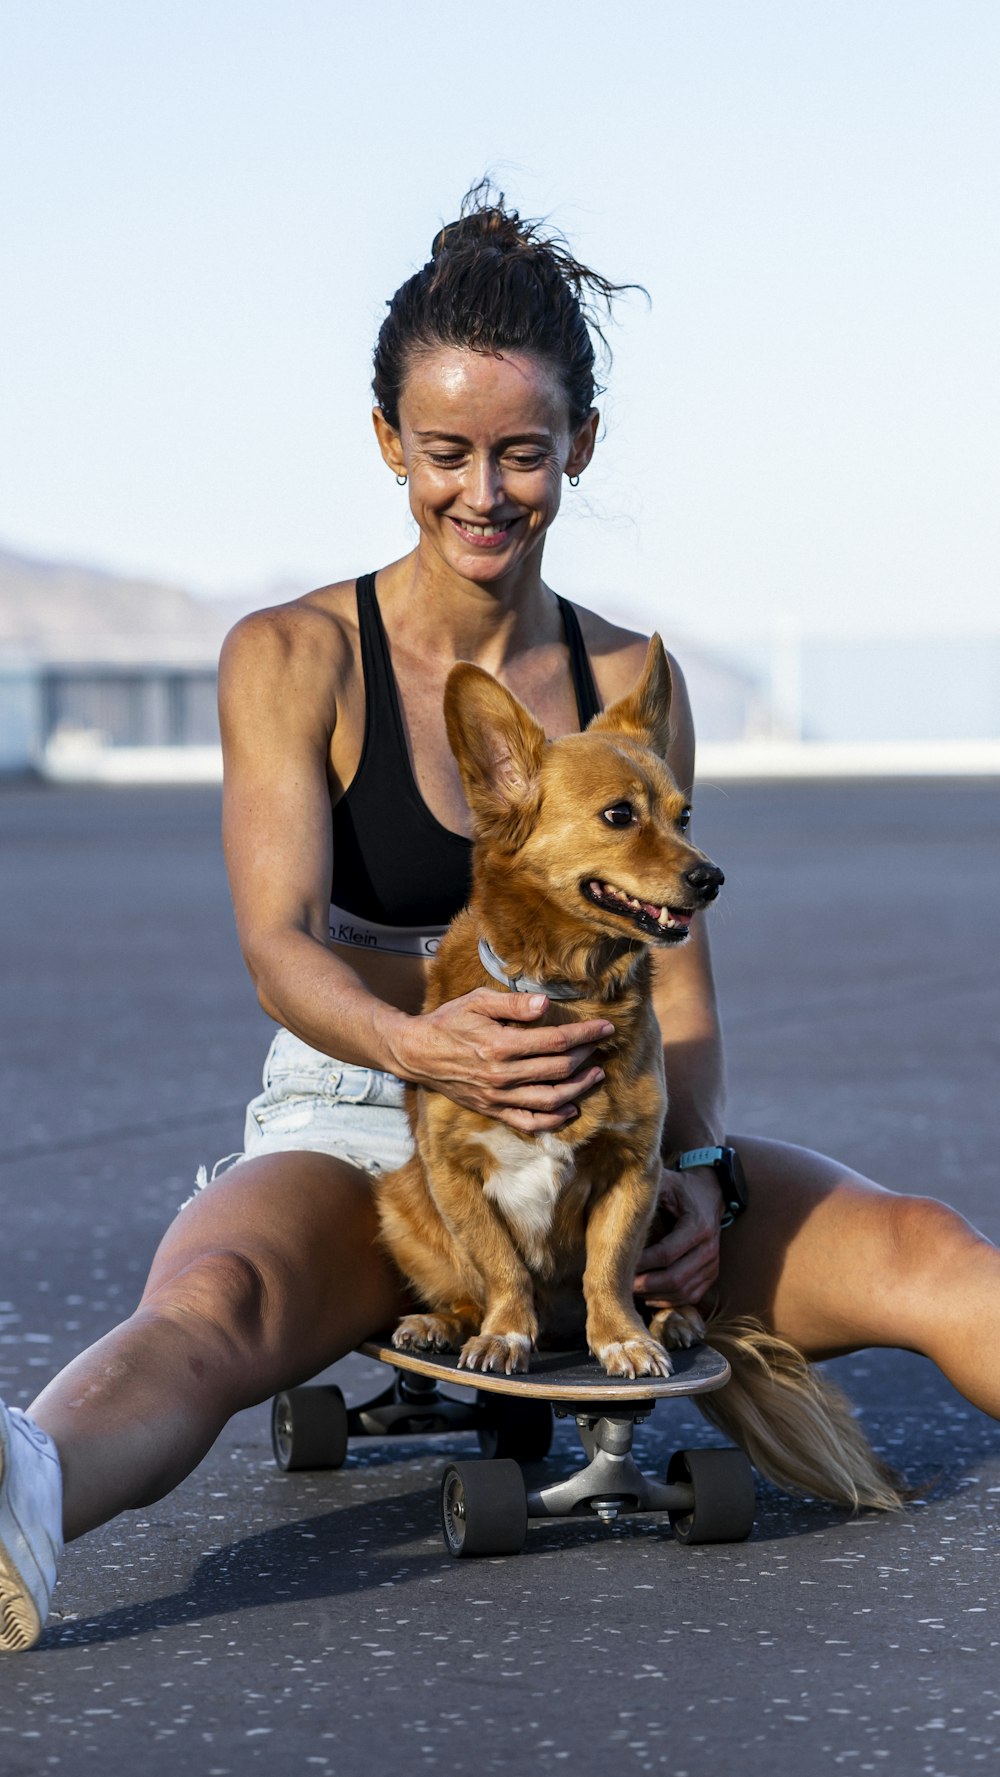 a woman sitting on a skateboard holding a dog